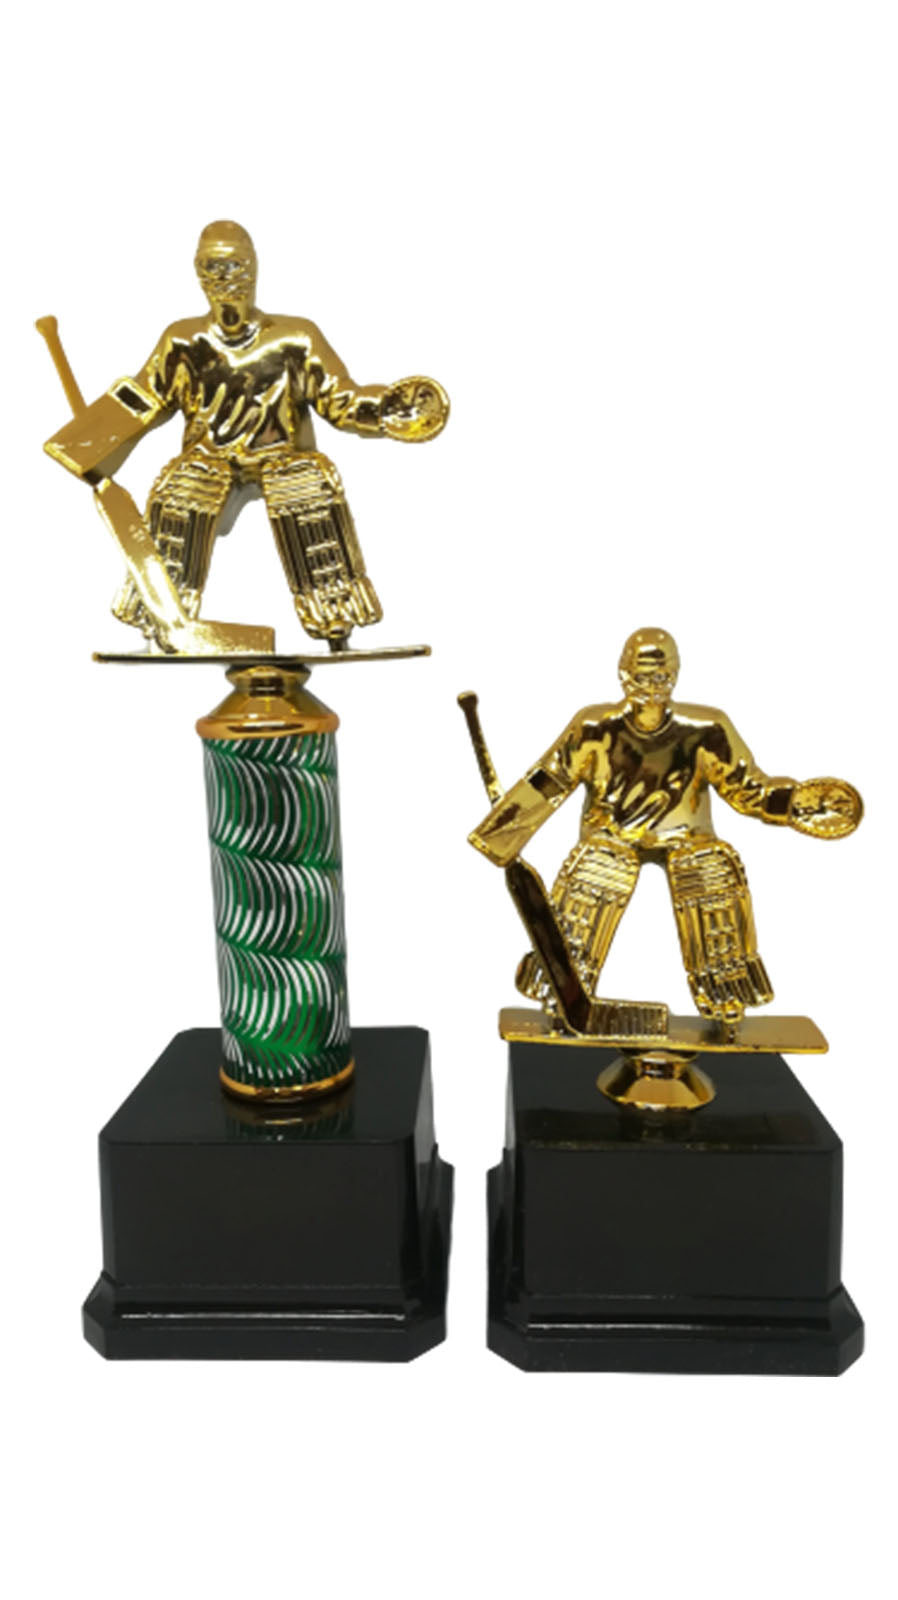 S21-Plastic Hockey GoalKeeper Trophy